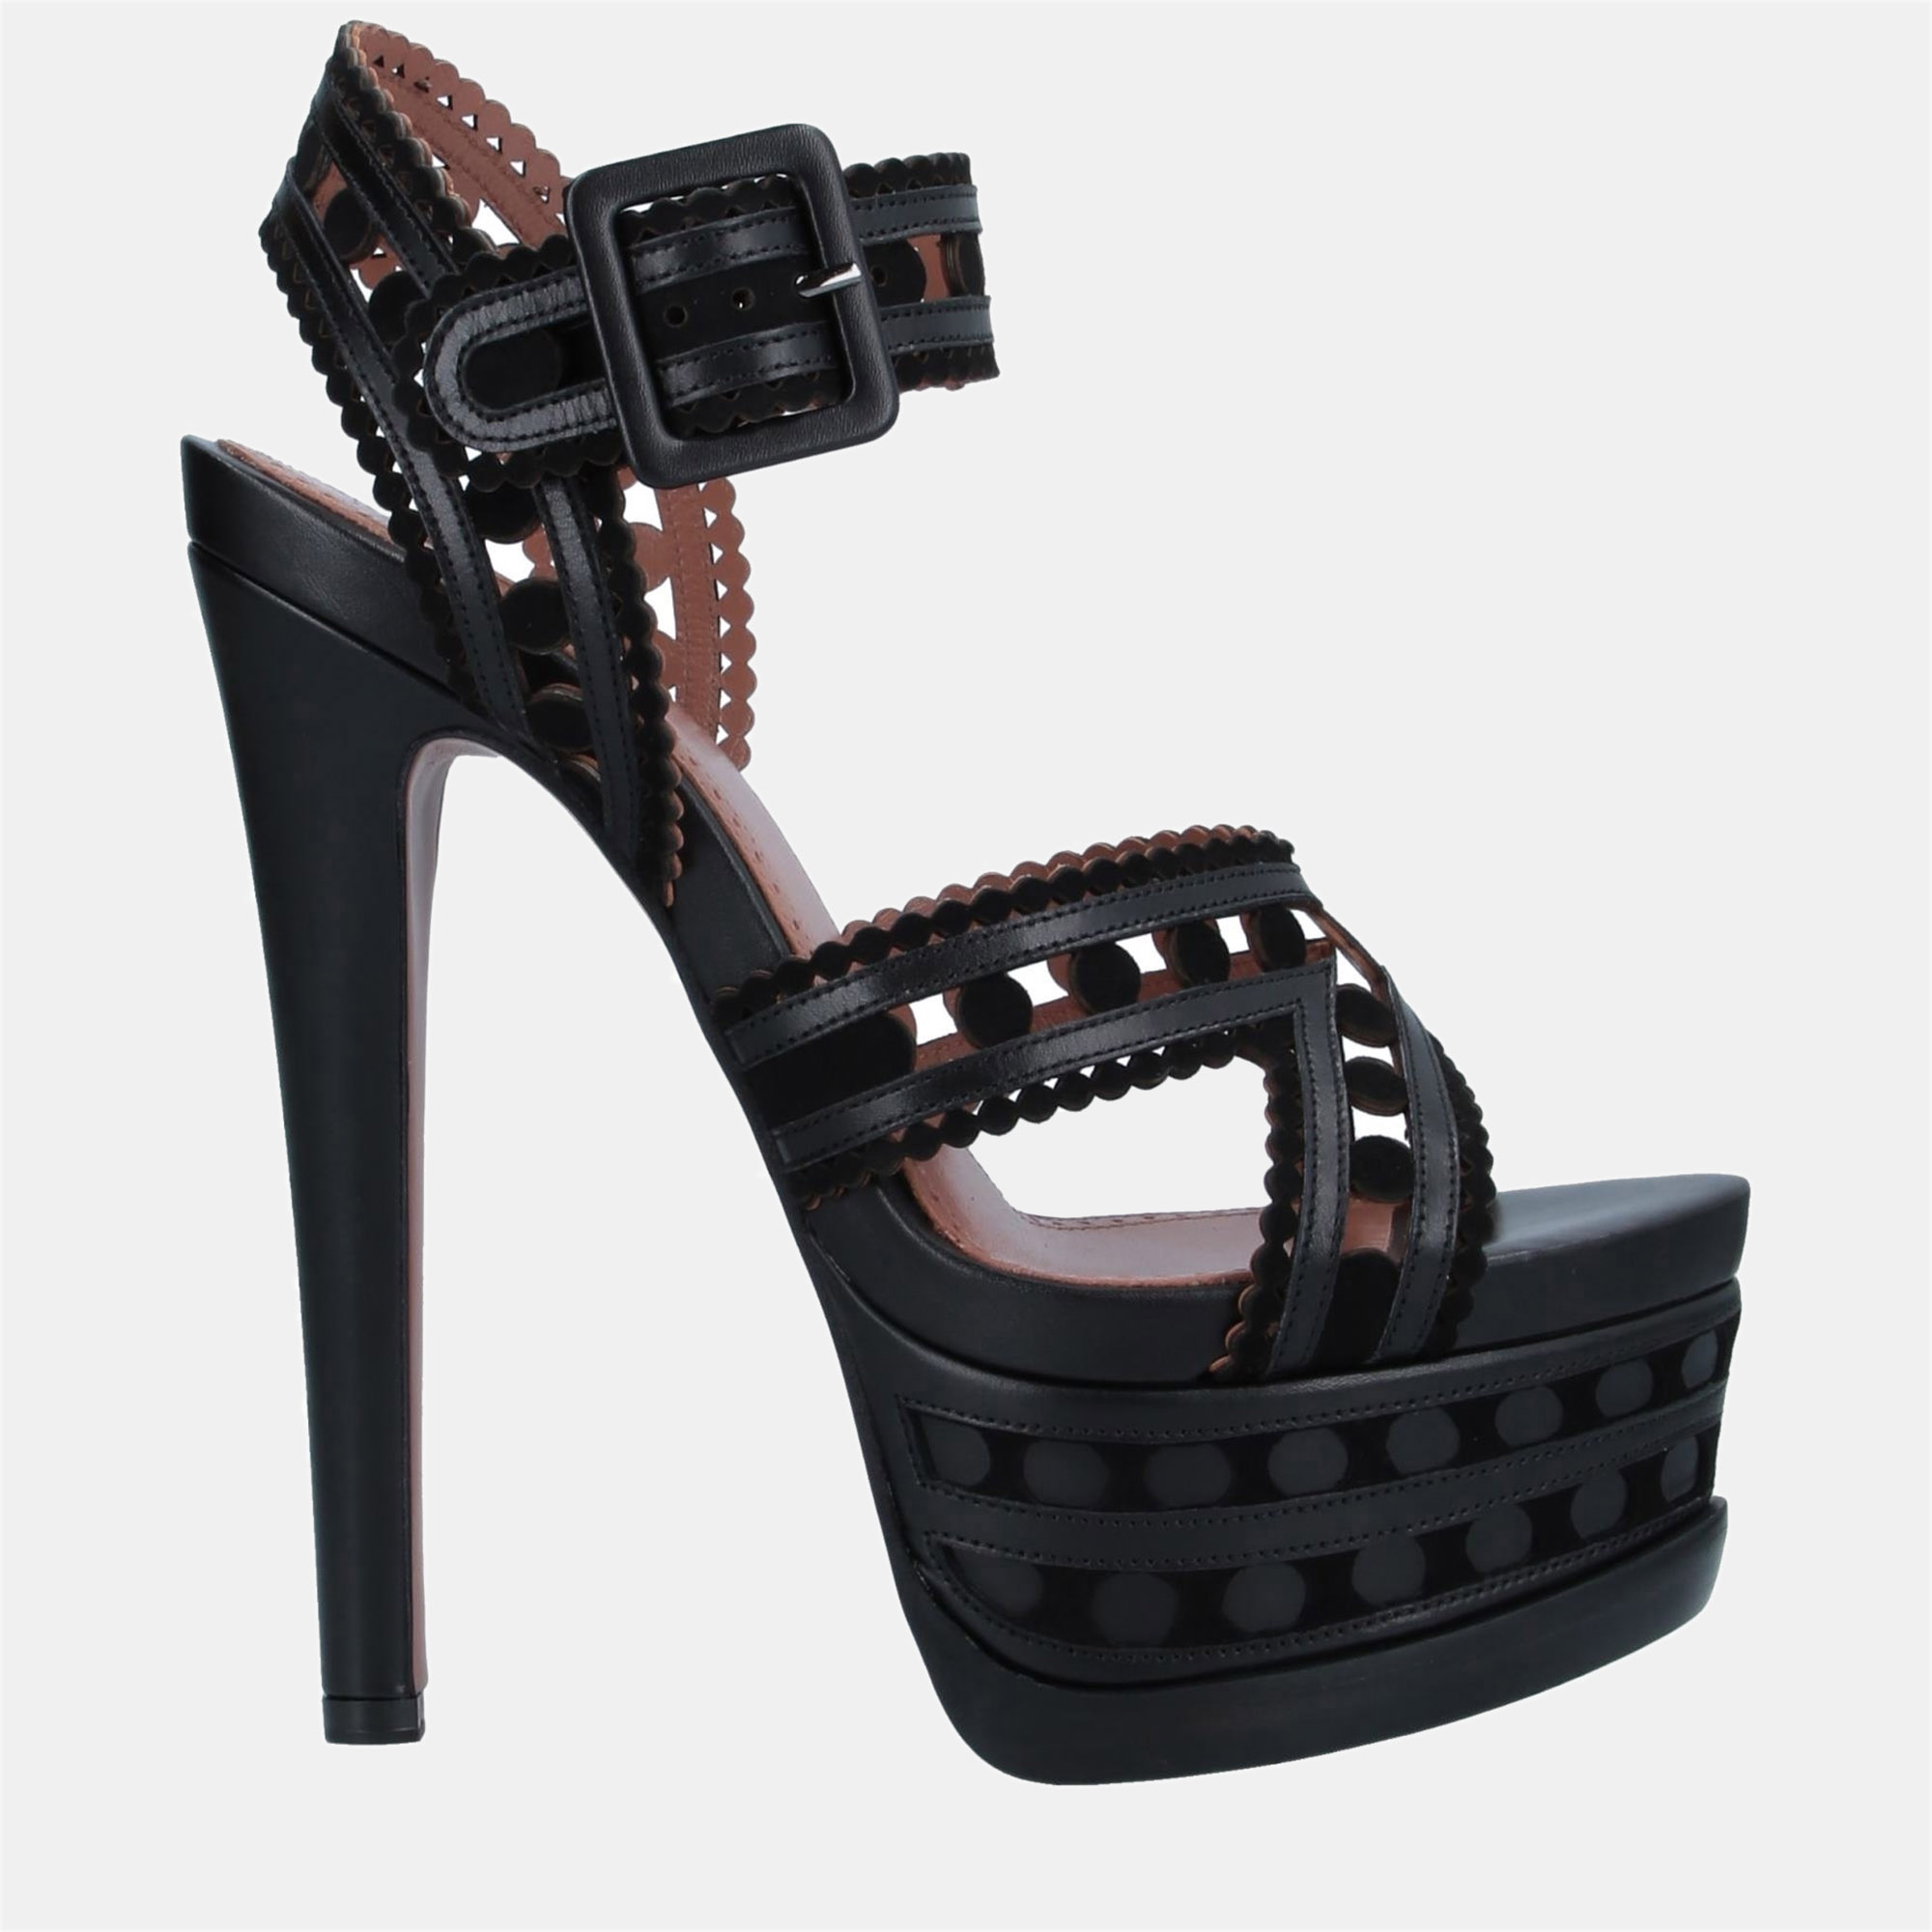 Alaia black leather platform sandals 36.5